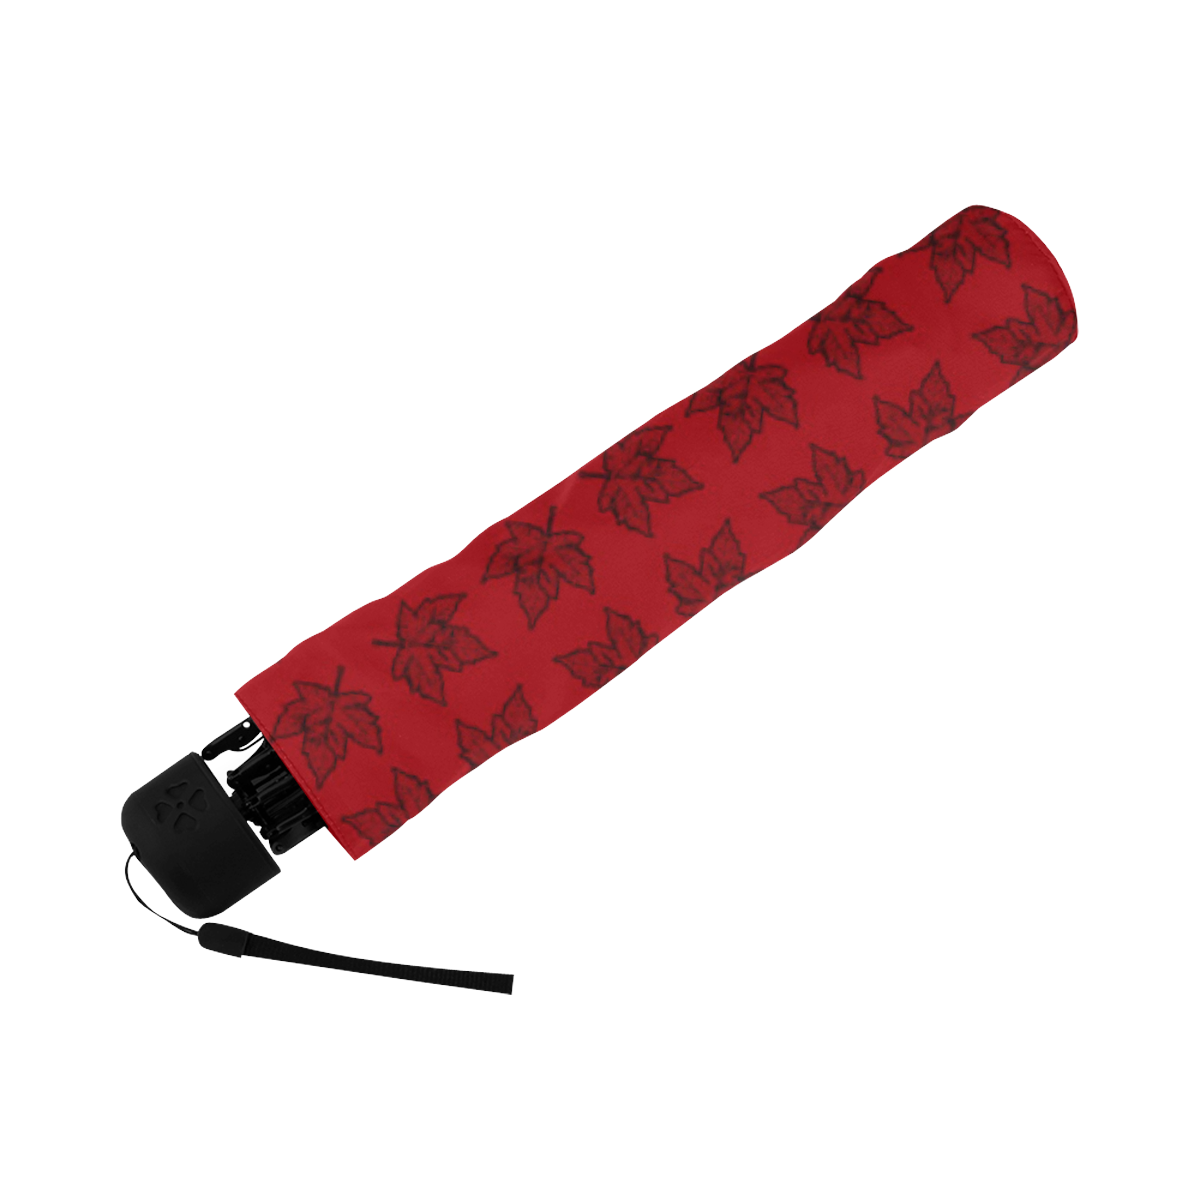 Cool Canada Red & Black Umbrella Anti-UV Foldable Umbrella (Underside Printing) (U07)